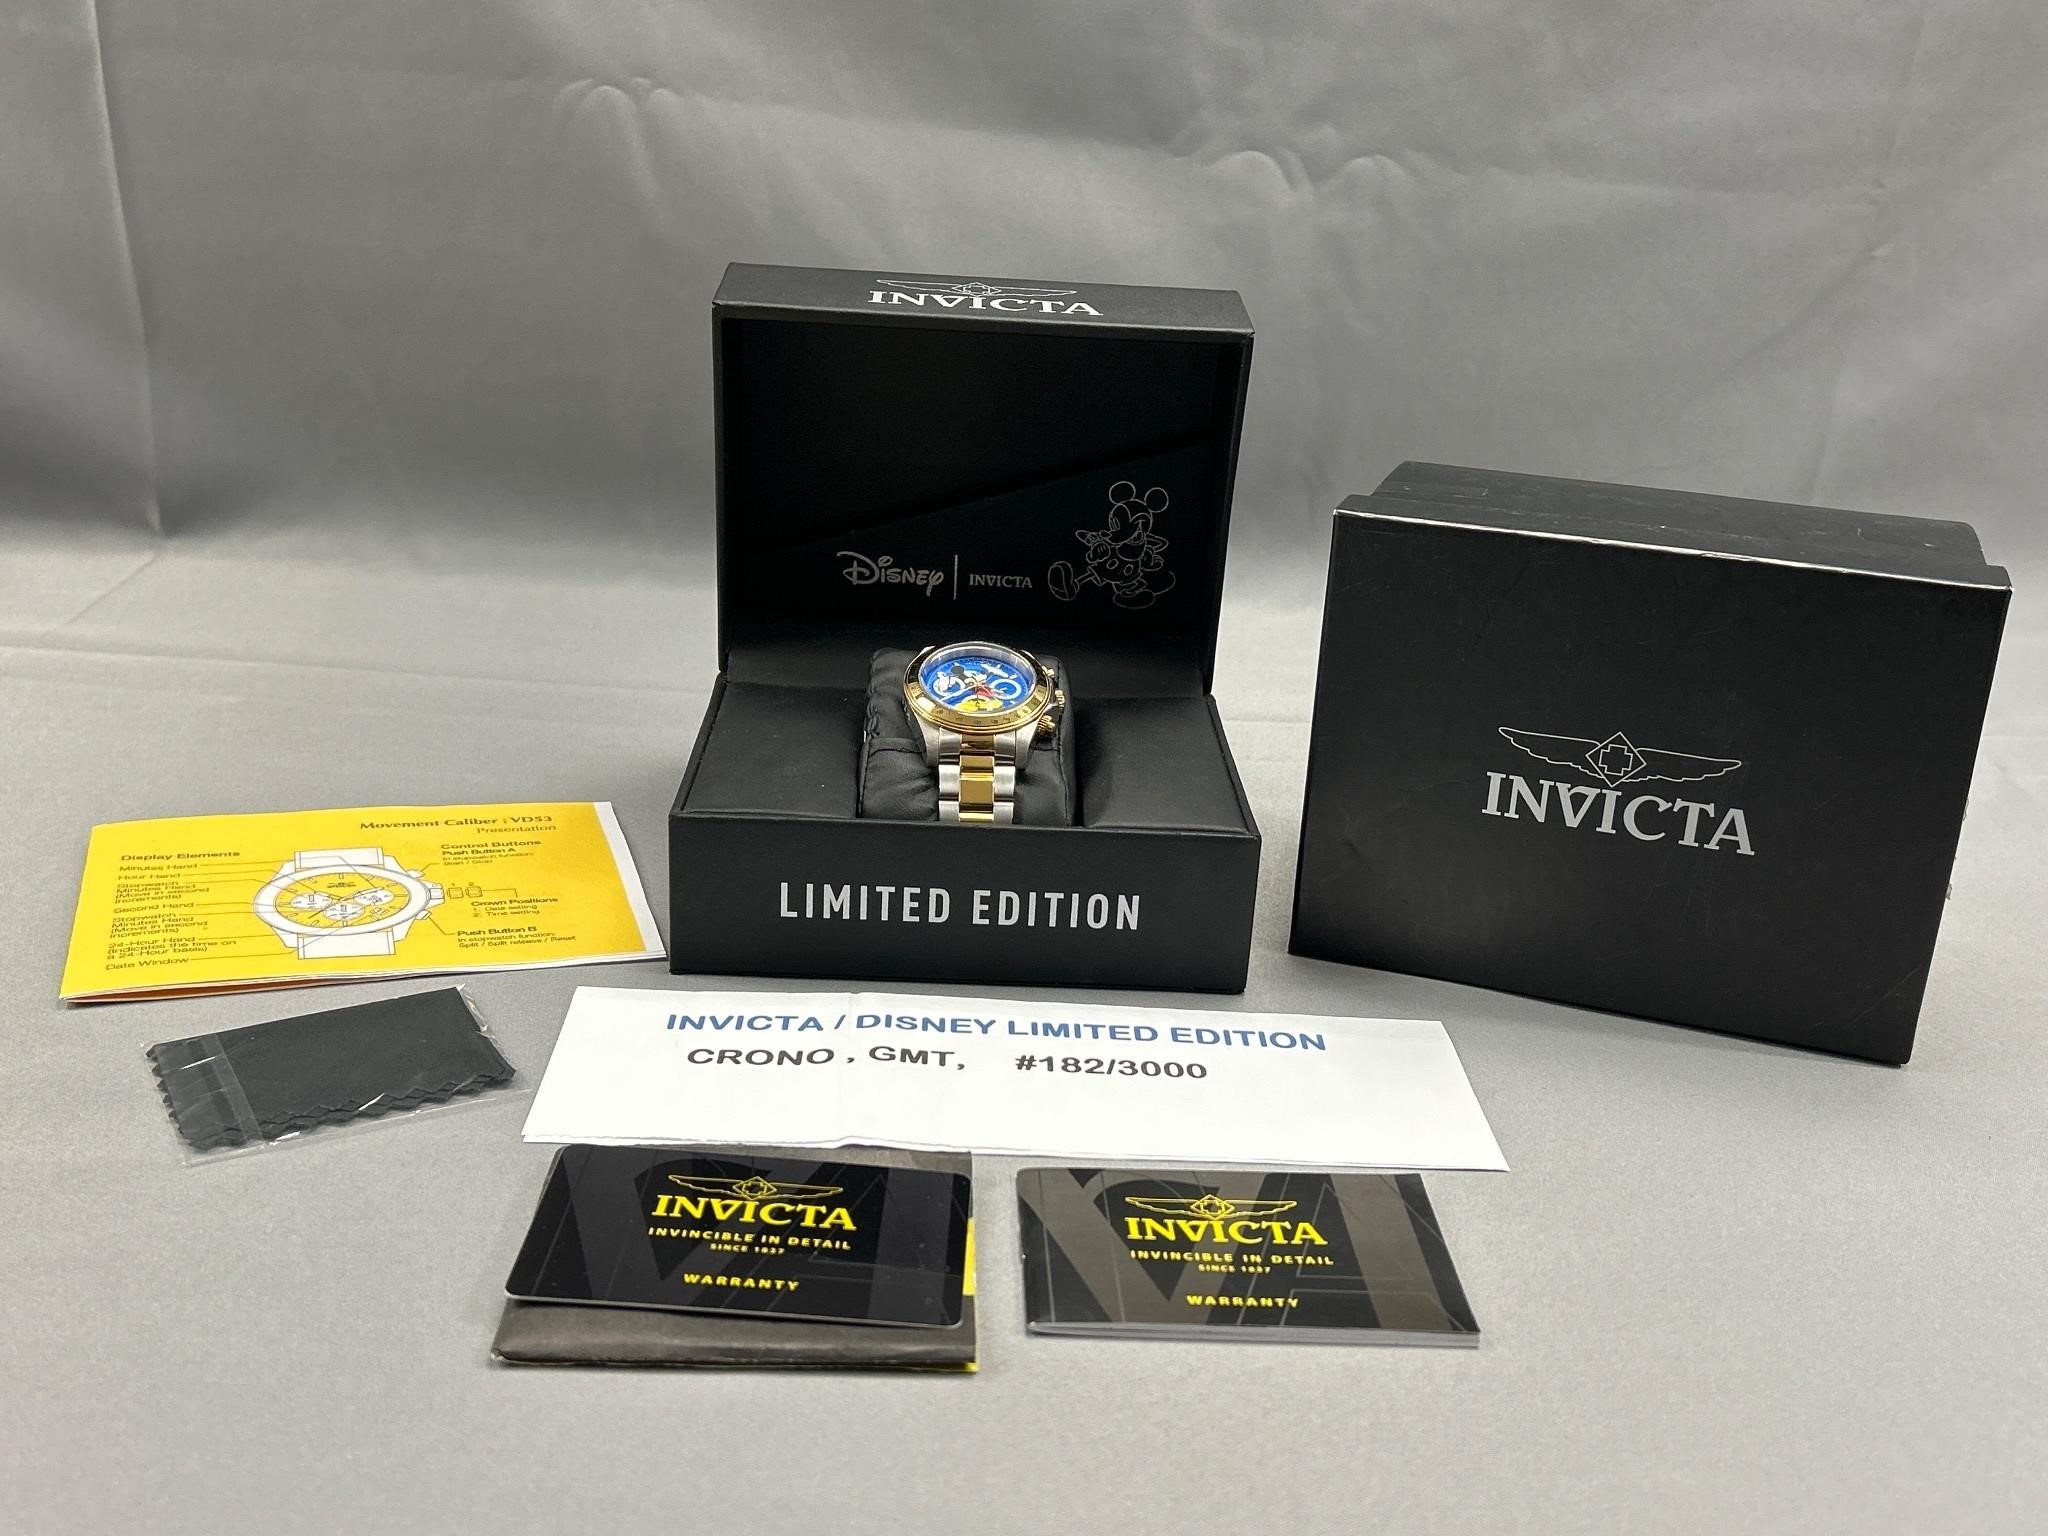 Invicta/Disney limited edition